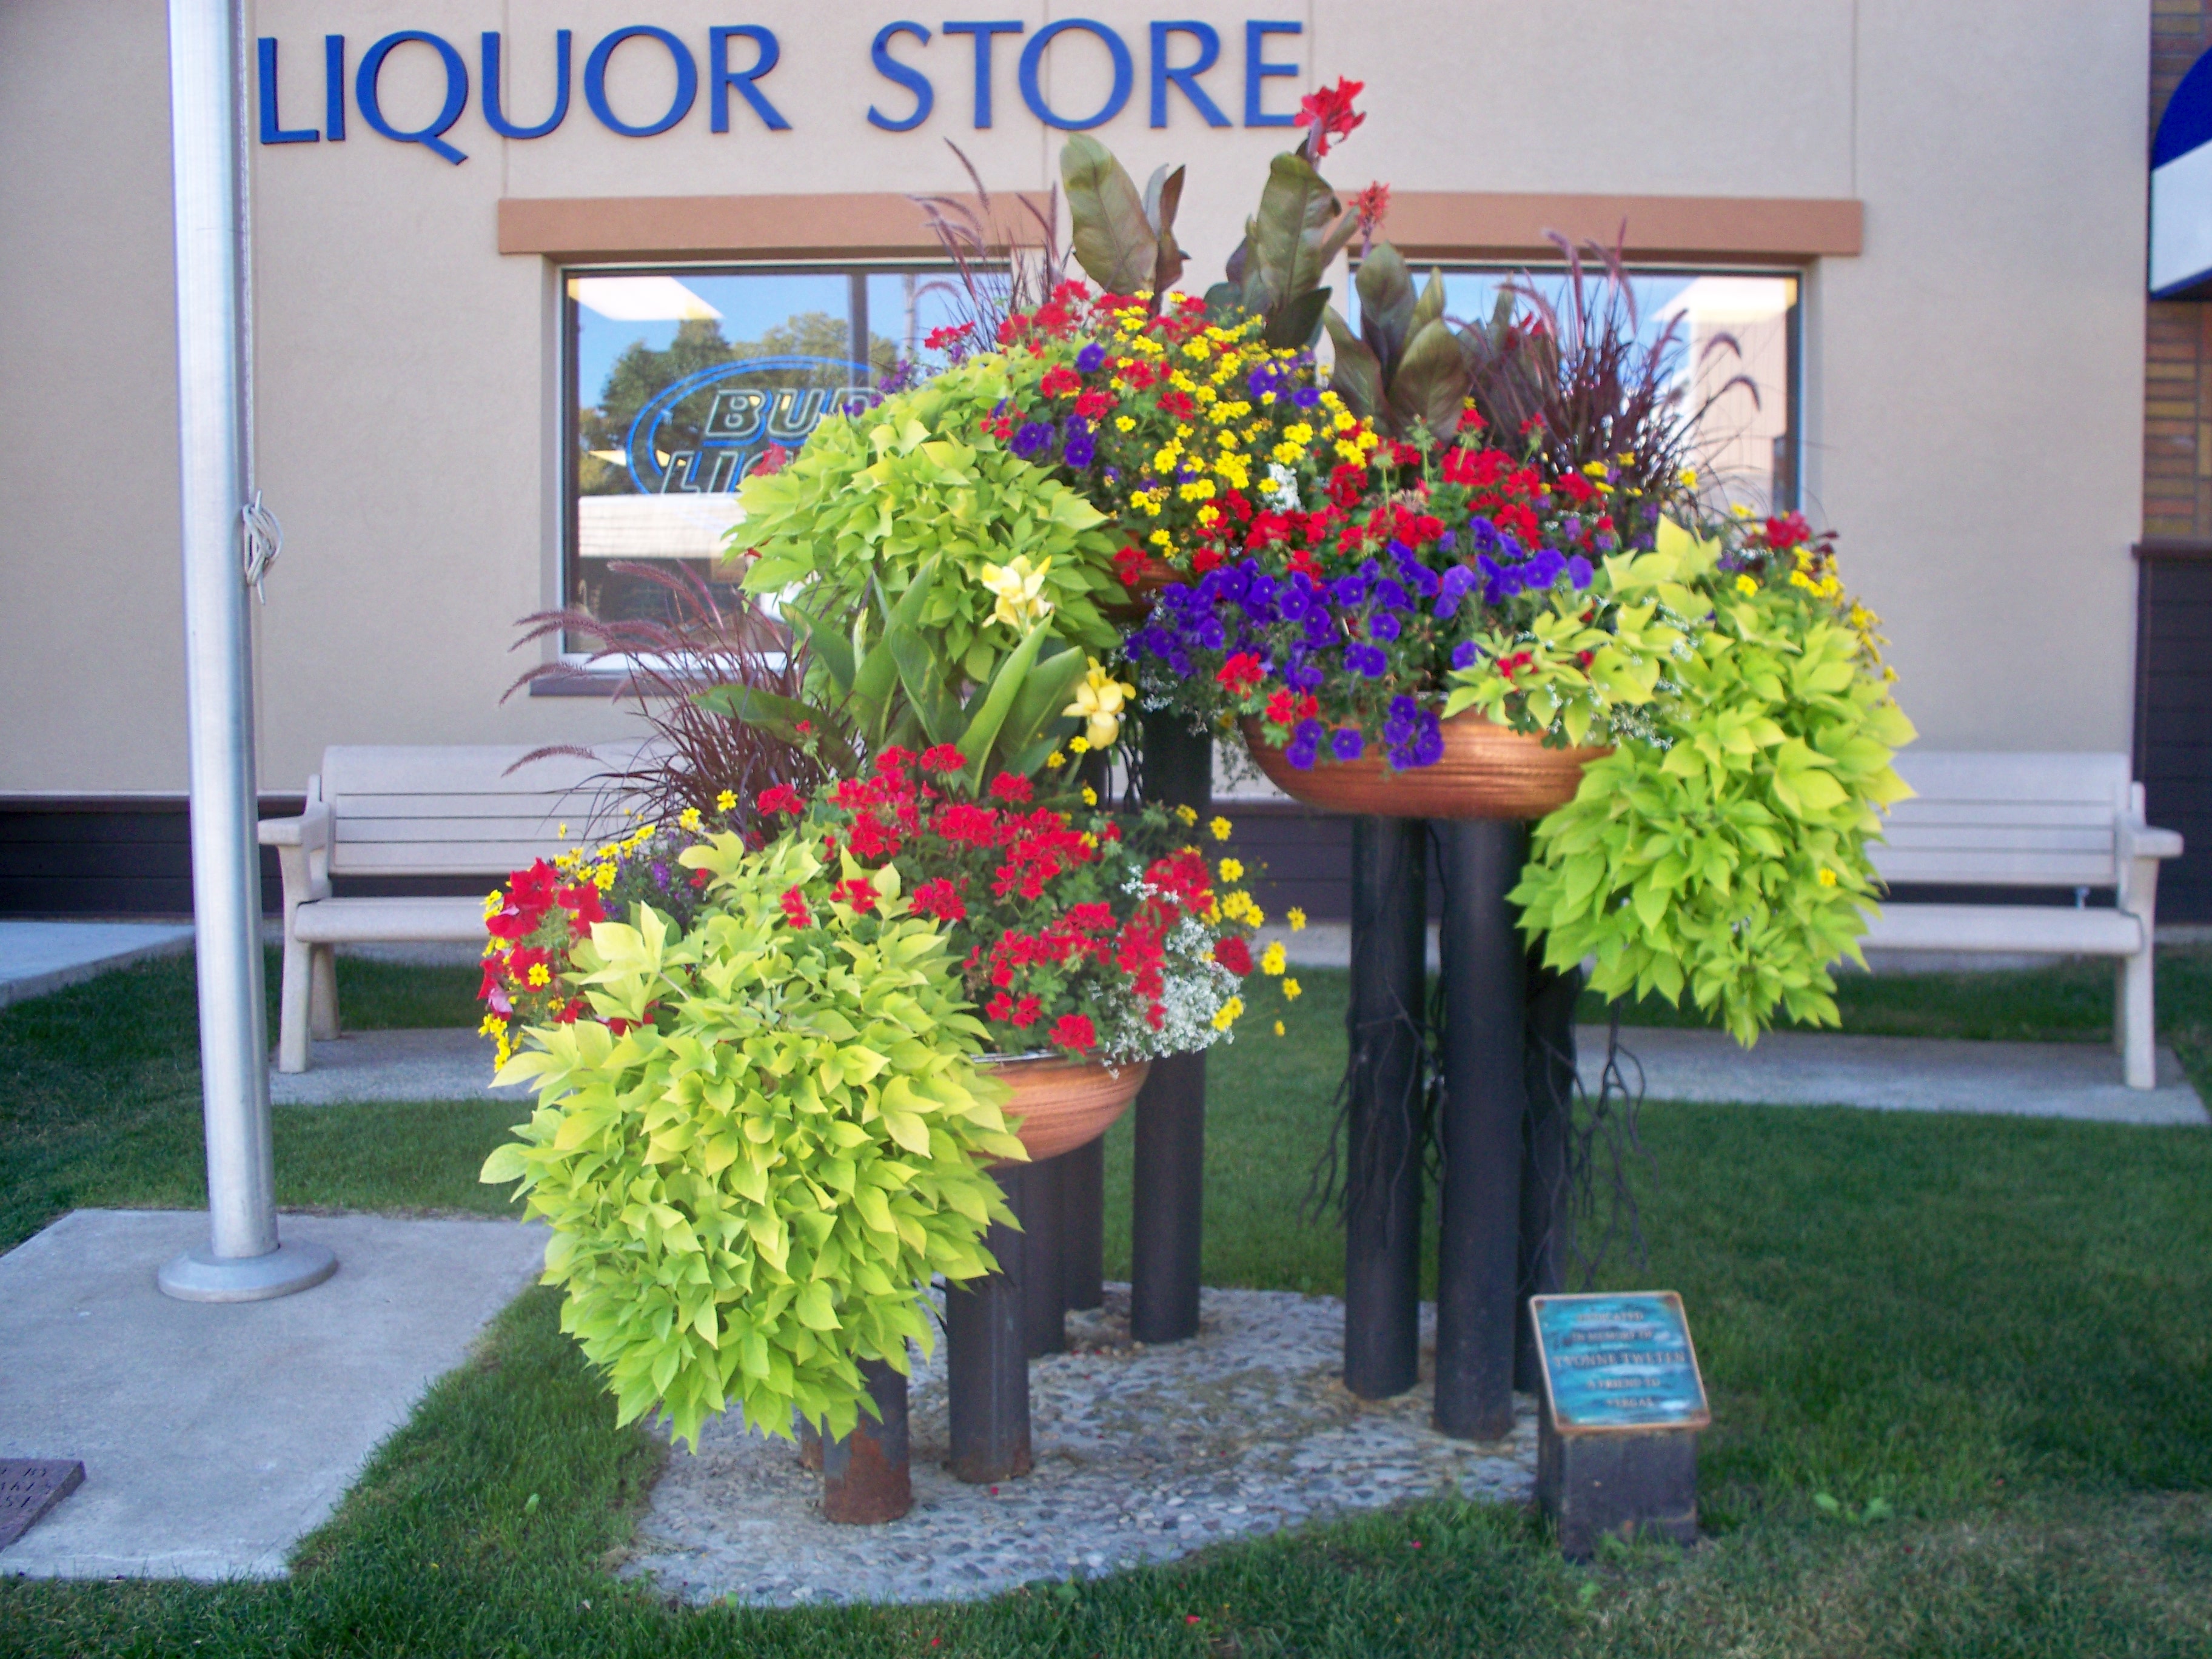 Find the Vergas Municipal Liquor Store on Facebook